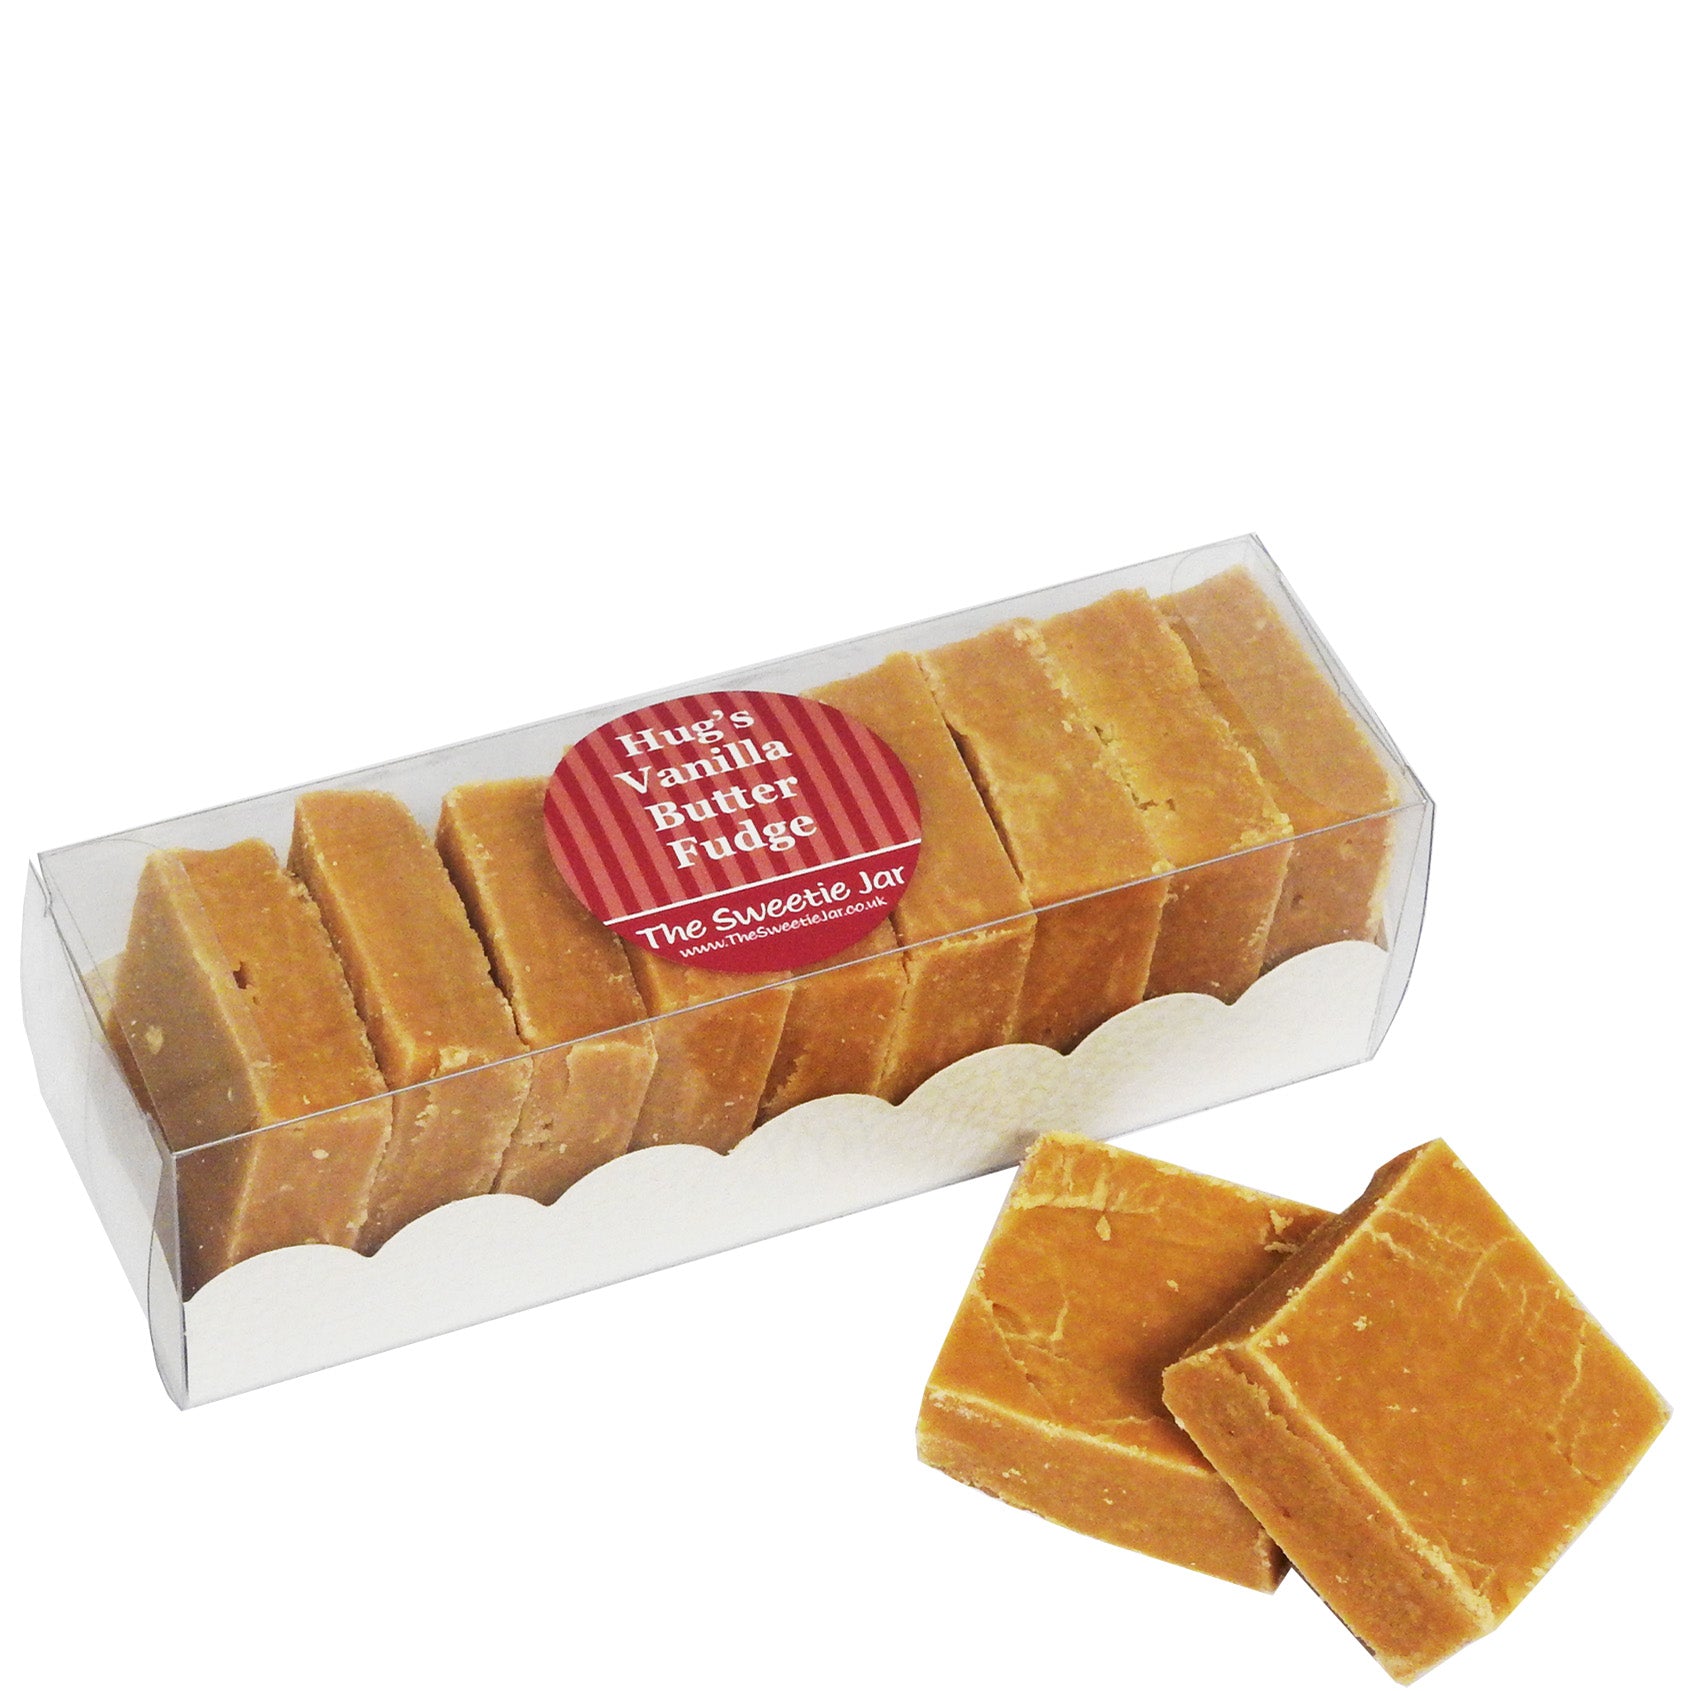 Hug's Vanilla Butter Fudge Gift Box - Fabulous Fudge at The Sweetie Jar